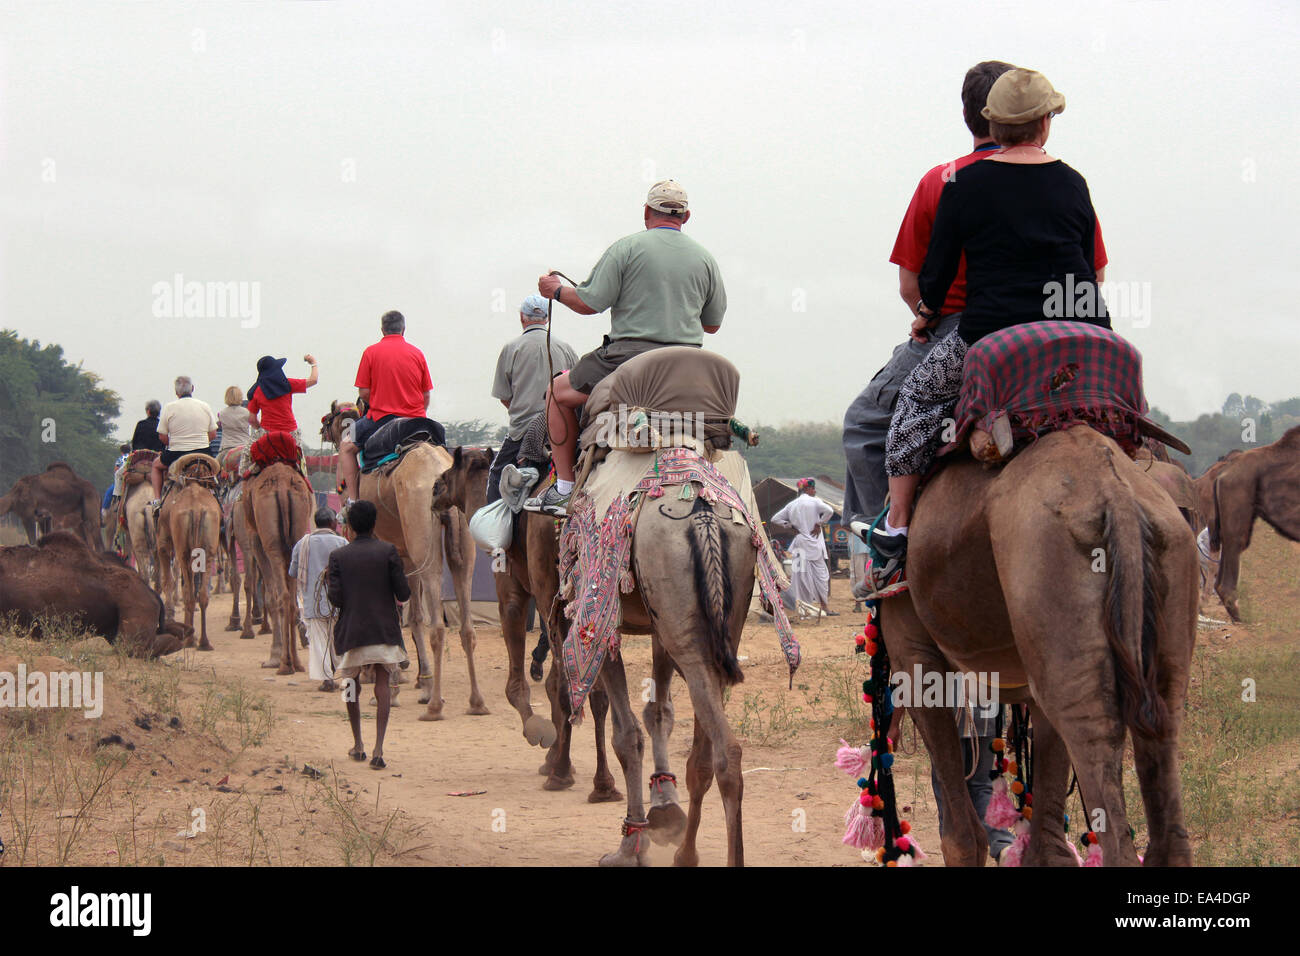 camel, camels, eastern africa, horizontal, kenya, kenyan, maralal, people, person, ride, riding, samburu, sightsee, sightseeing, Stock Photo